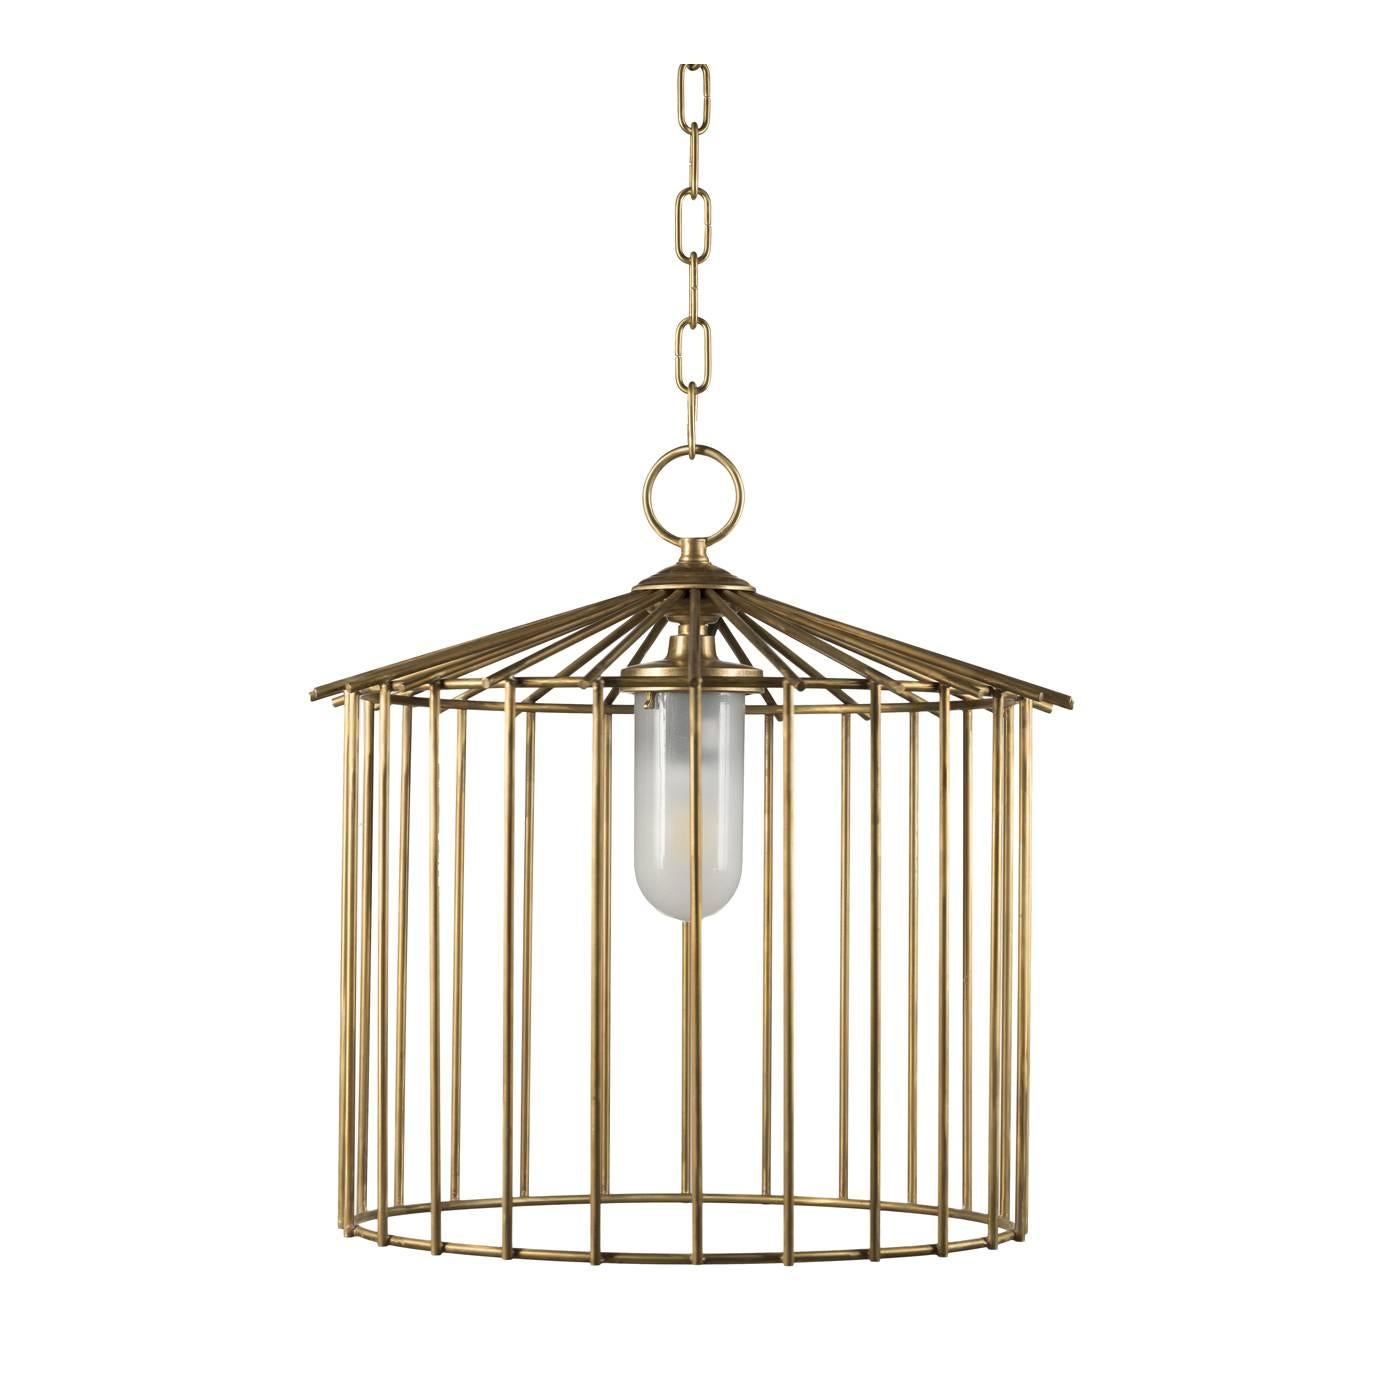 Cage 1 Medium Ceiling Lamp For Sale